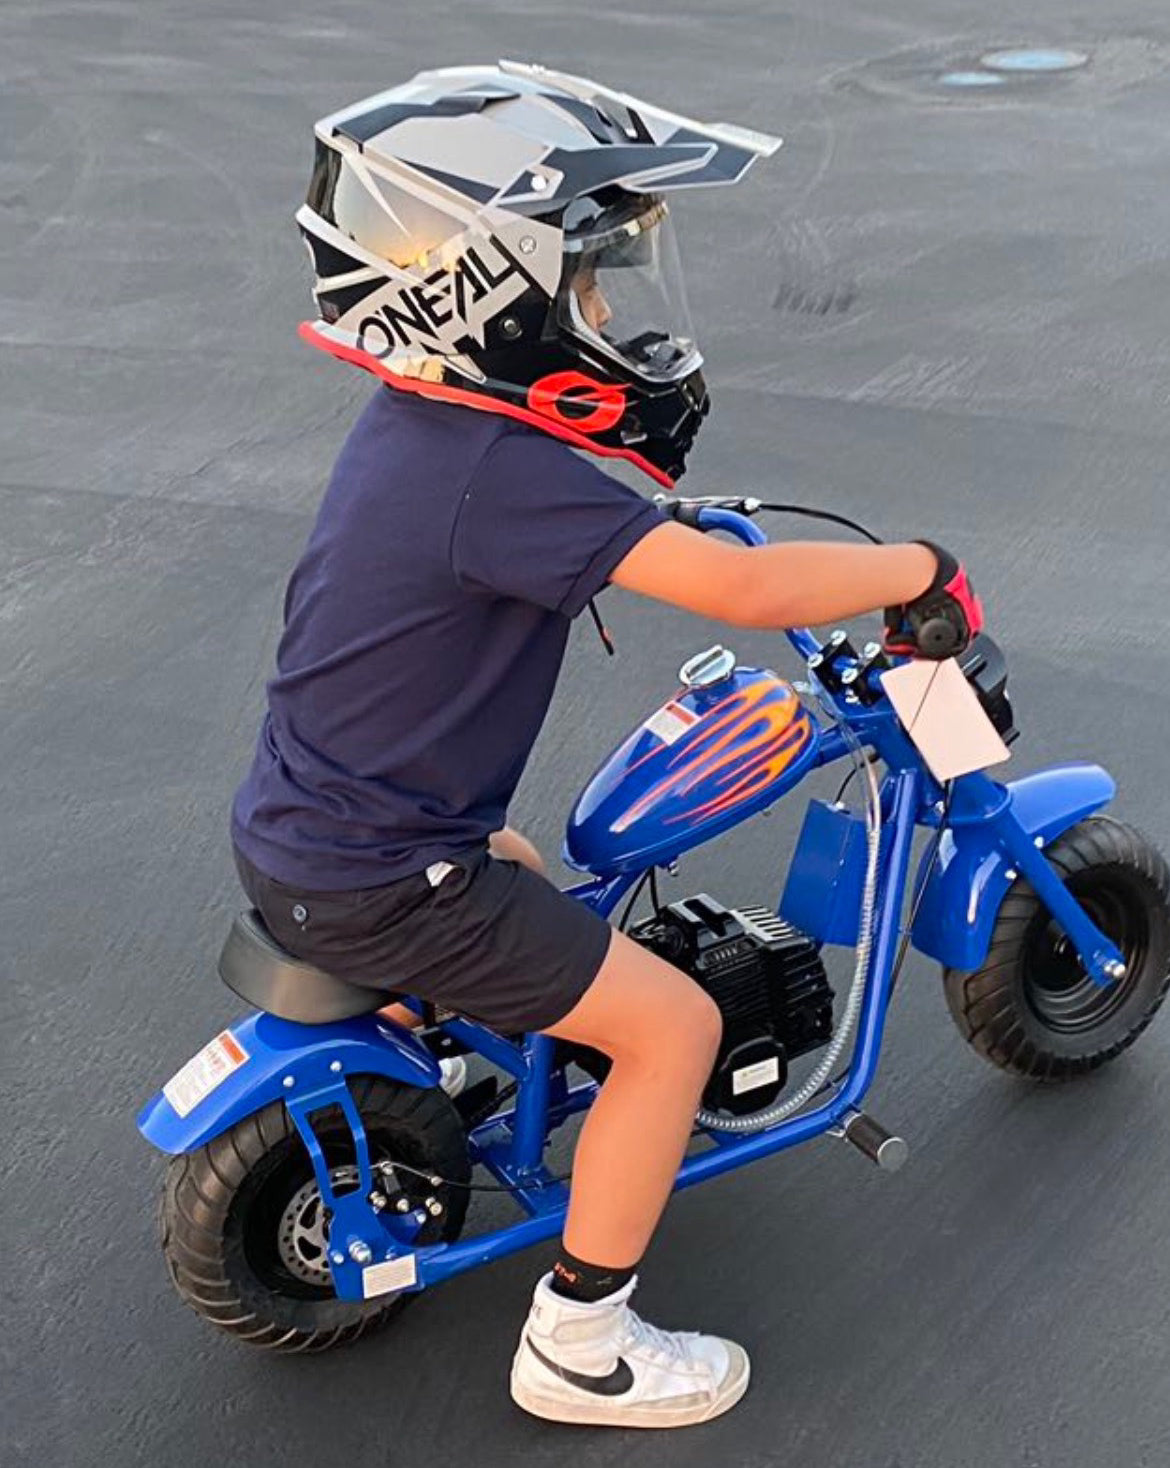 PINK GBMOTO Mini Chopper Style kid Bike, 49.4 CC 2-Stroke Dirt Bike with Big Headlight, Premium Tire, Metal Frame, Disc Brakes, Max Load 165Lbs, Up to 20Mph, EPA Approved